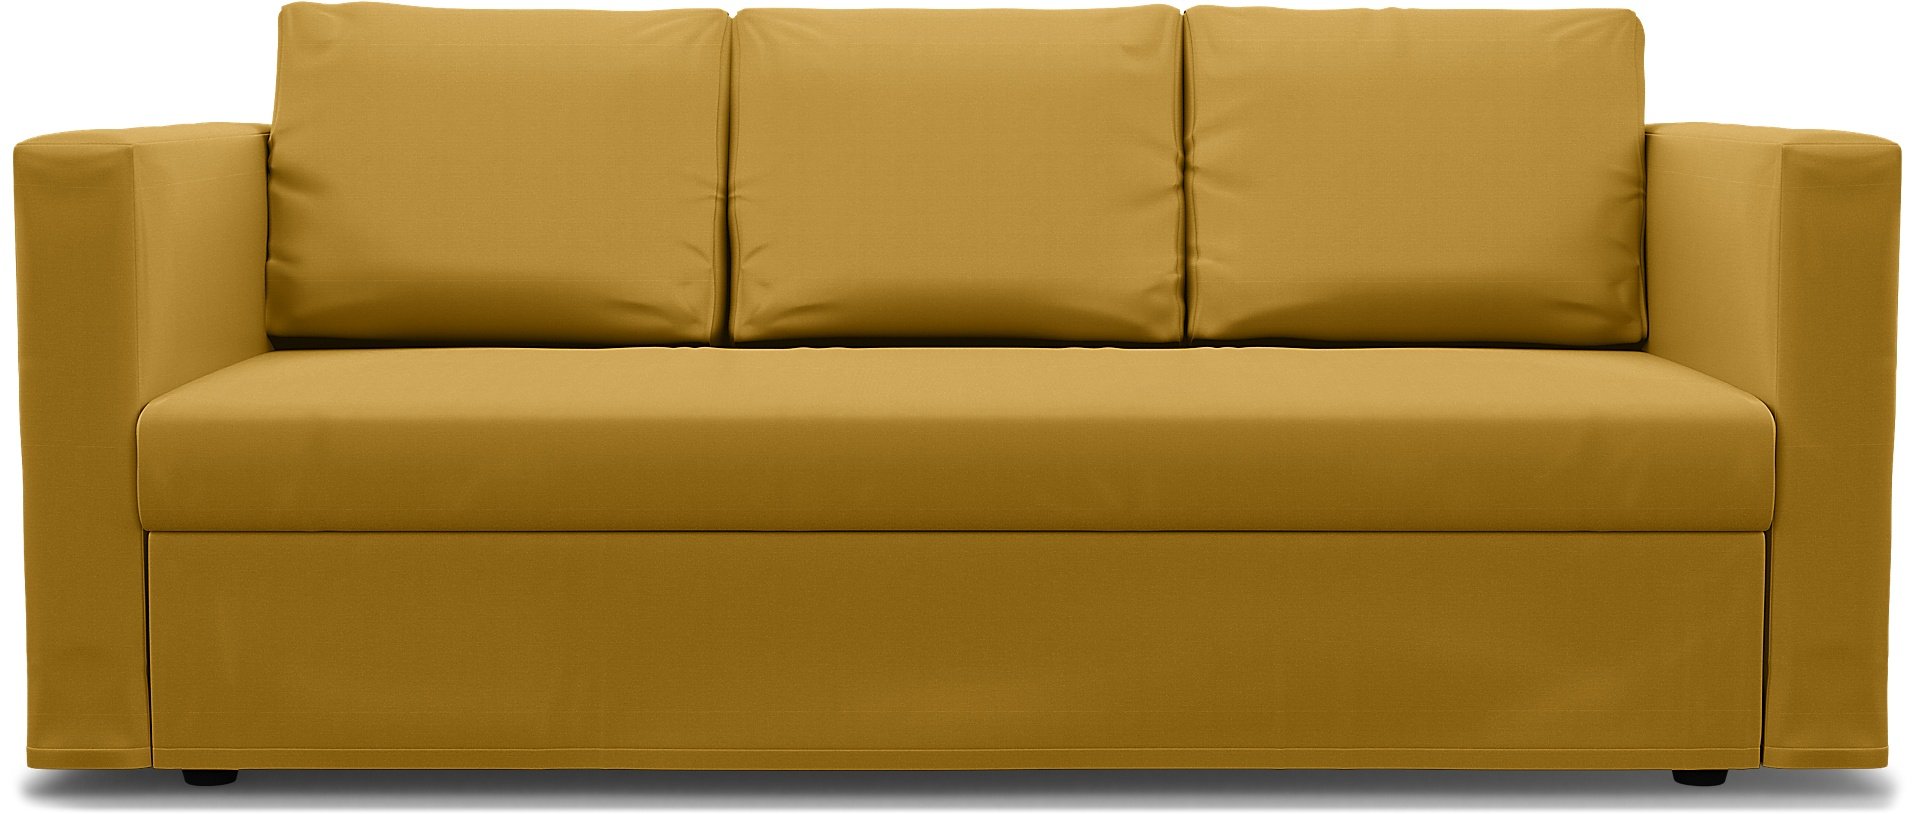 IKEA - Friheten 3 Seater Sofa Bed Cover, Honey Mustard, Cotton - Bemz